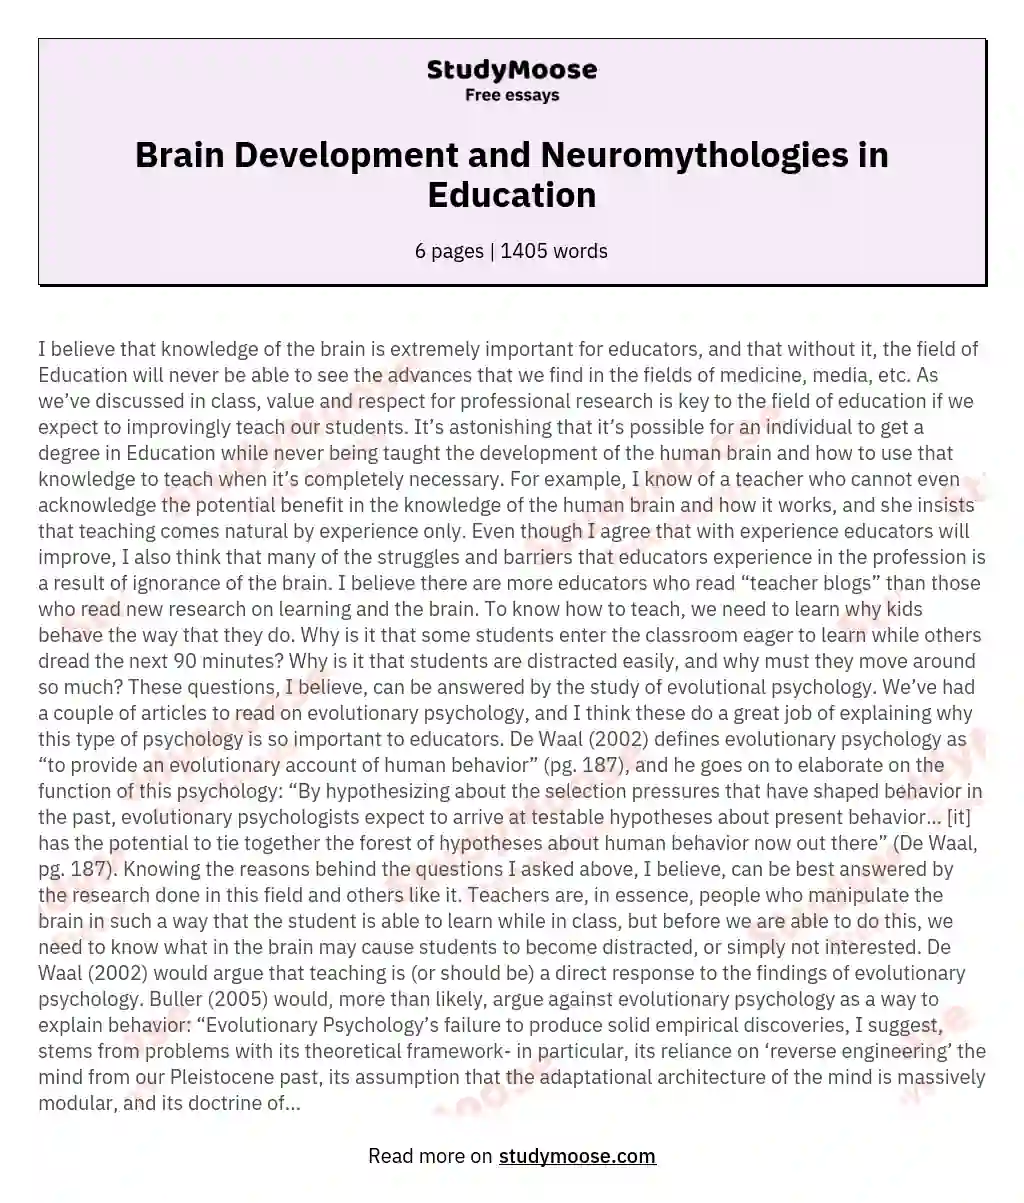 Brain Development and Neuromythologies in Education essay